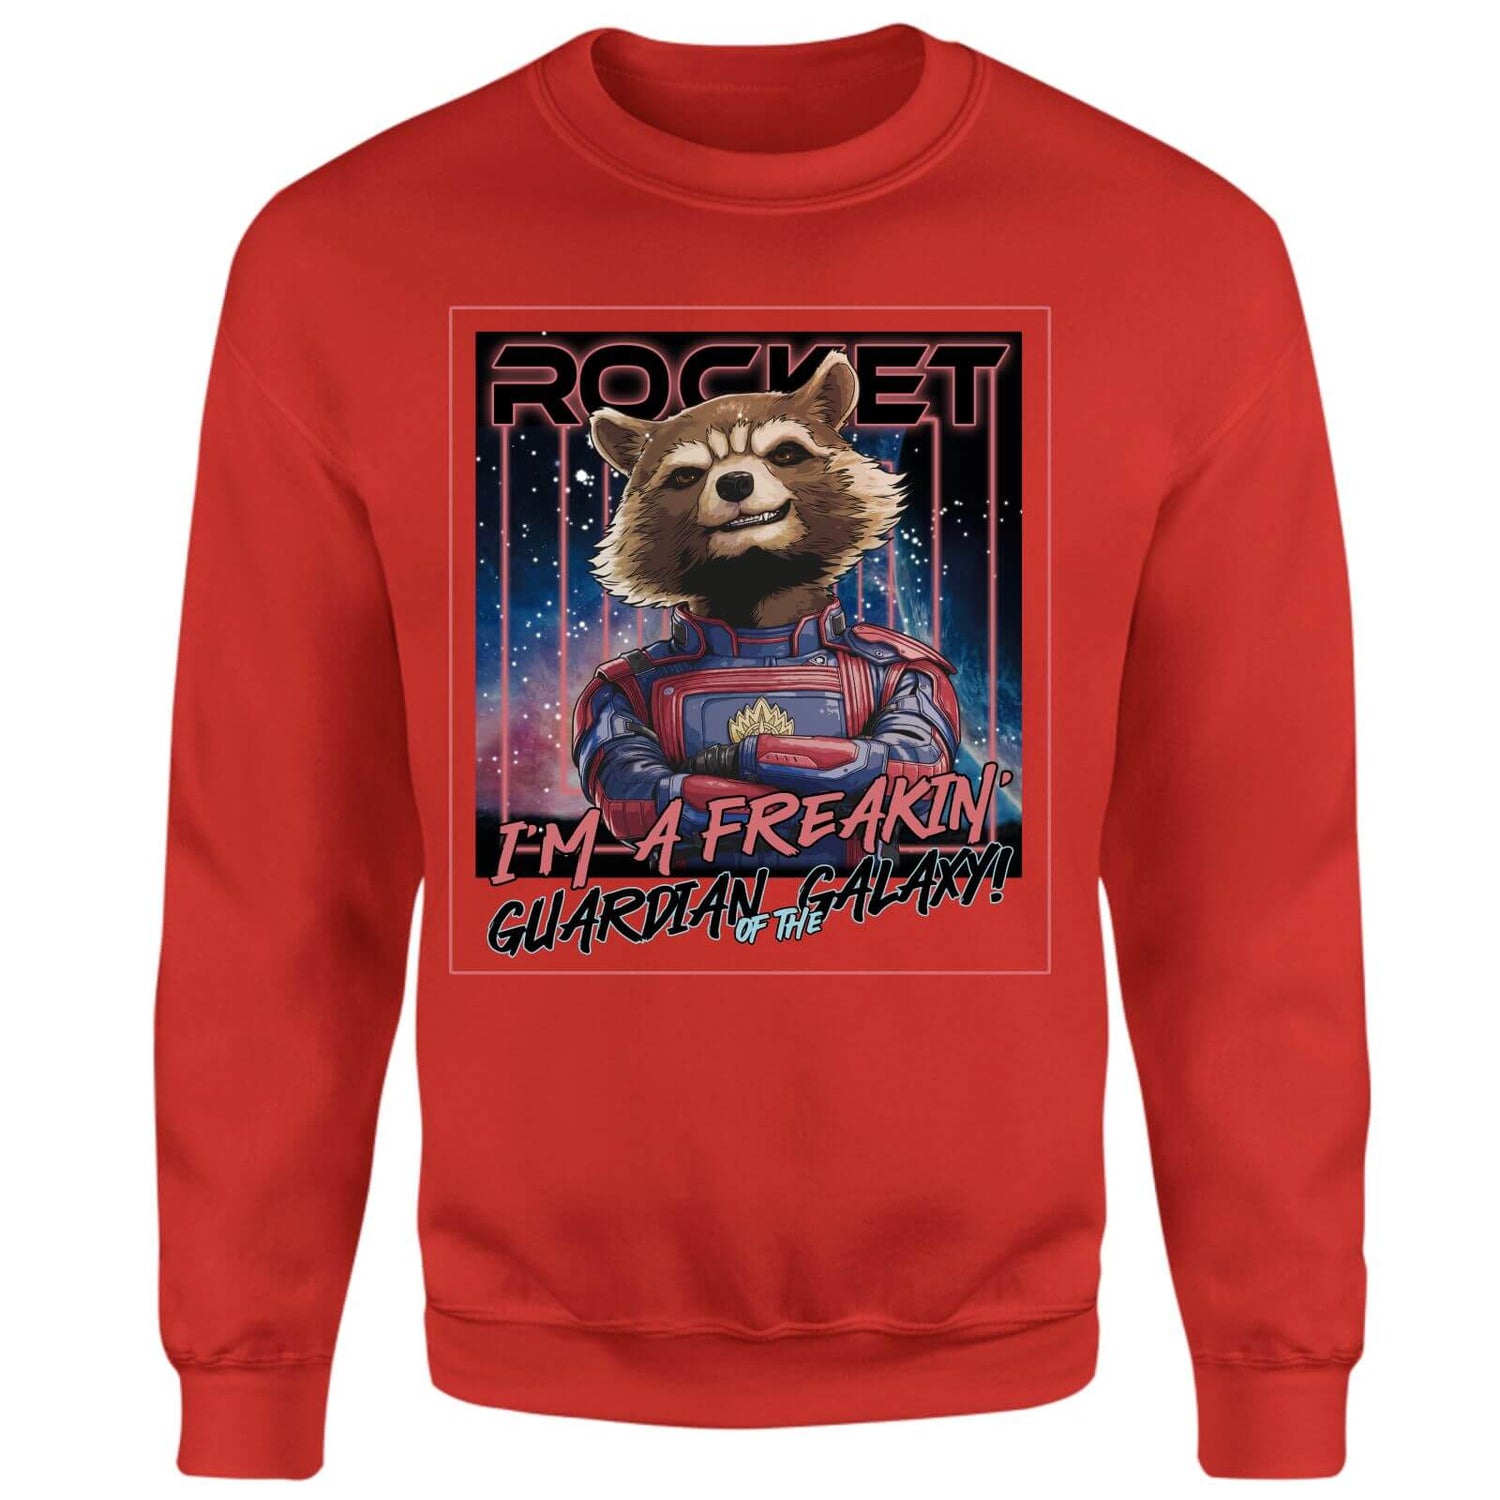 Guardians of the Galaxy Glowing Rocket Raccoon Sweatshirt - Red